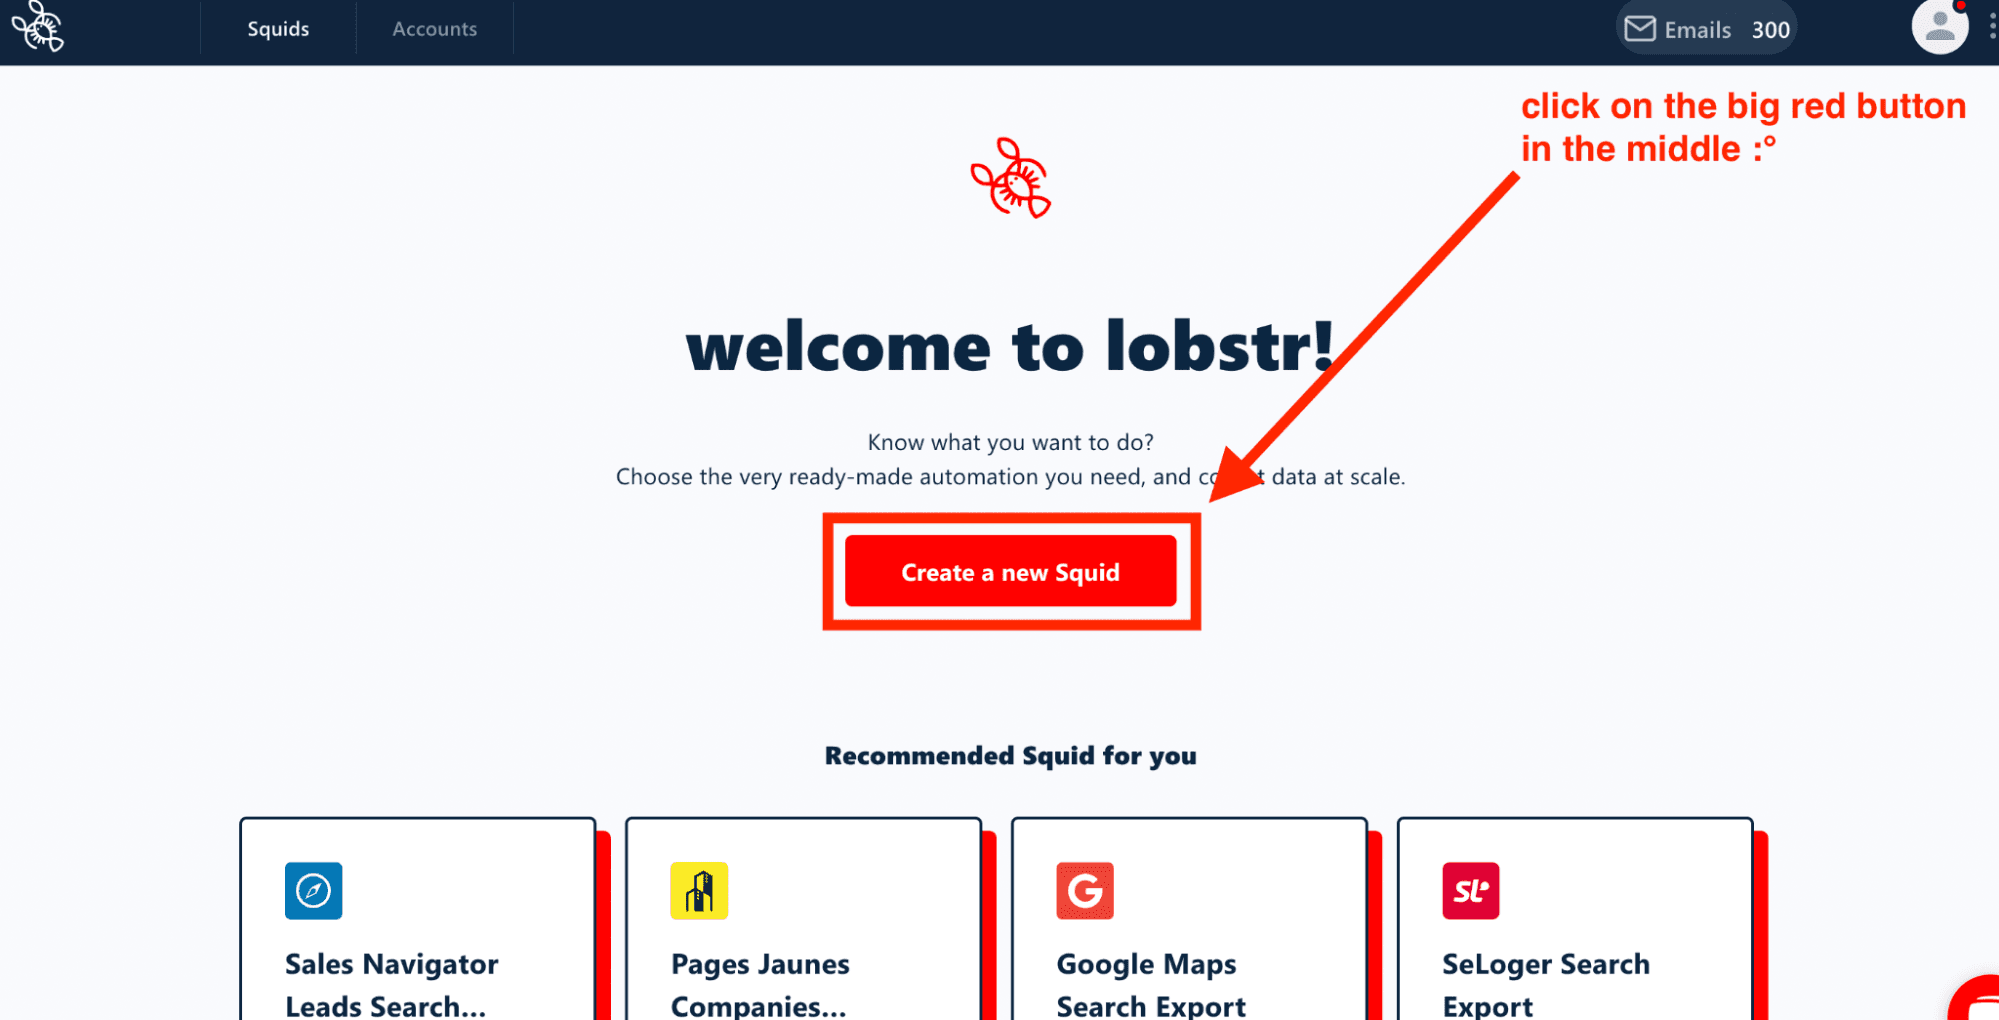 lobstr welcome screen app - image15.png